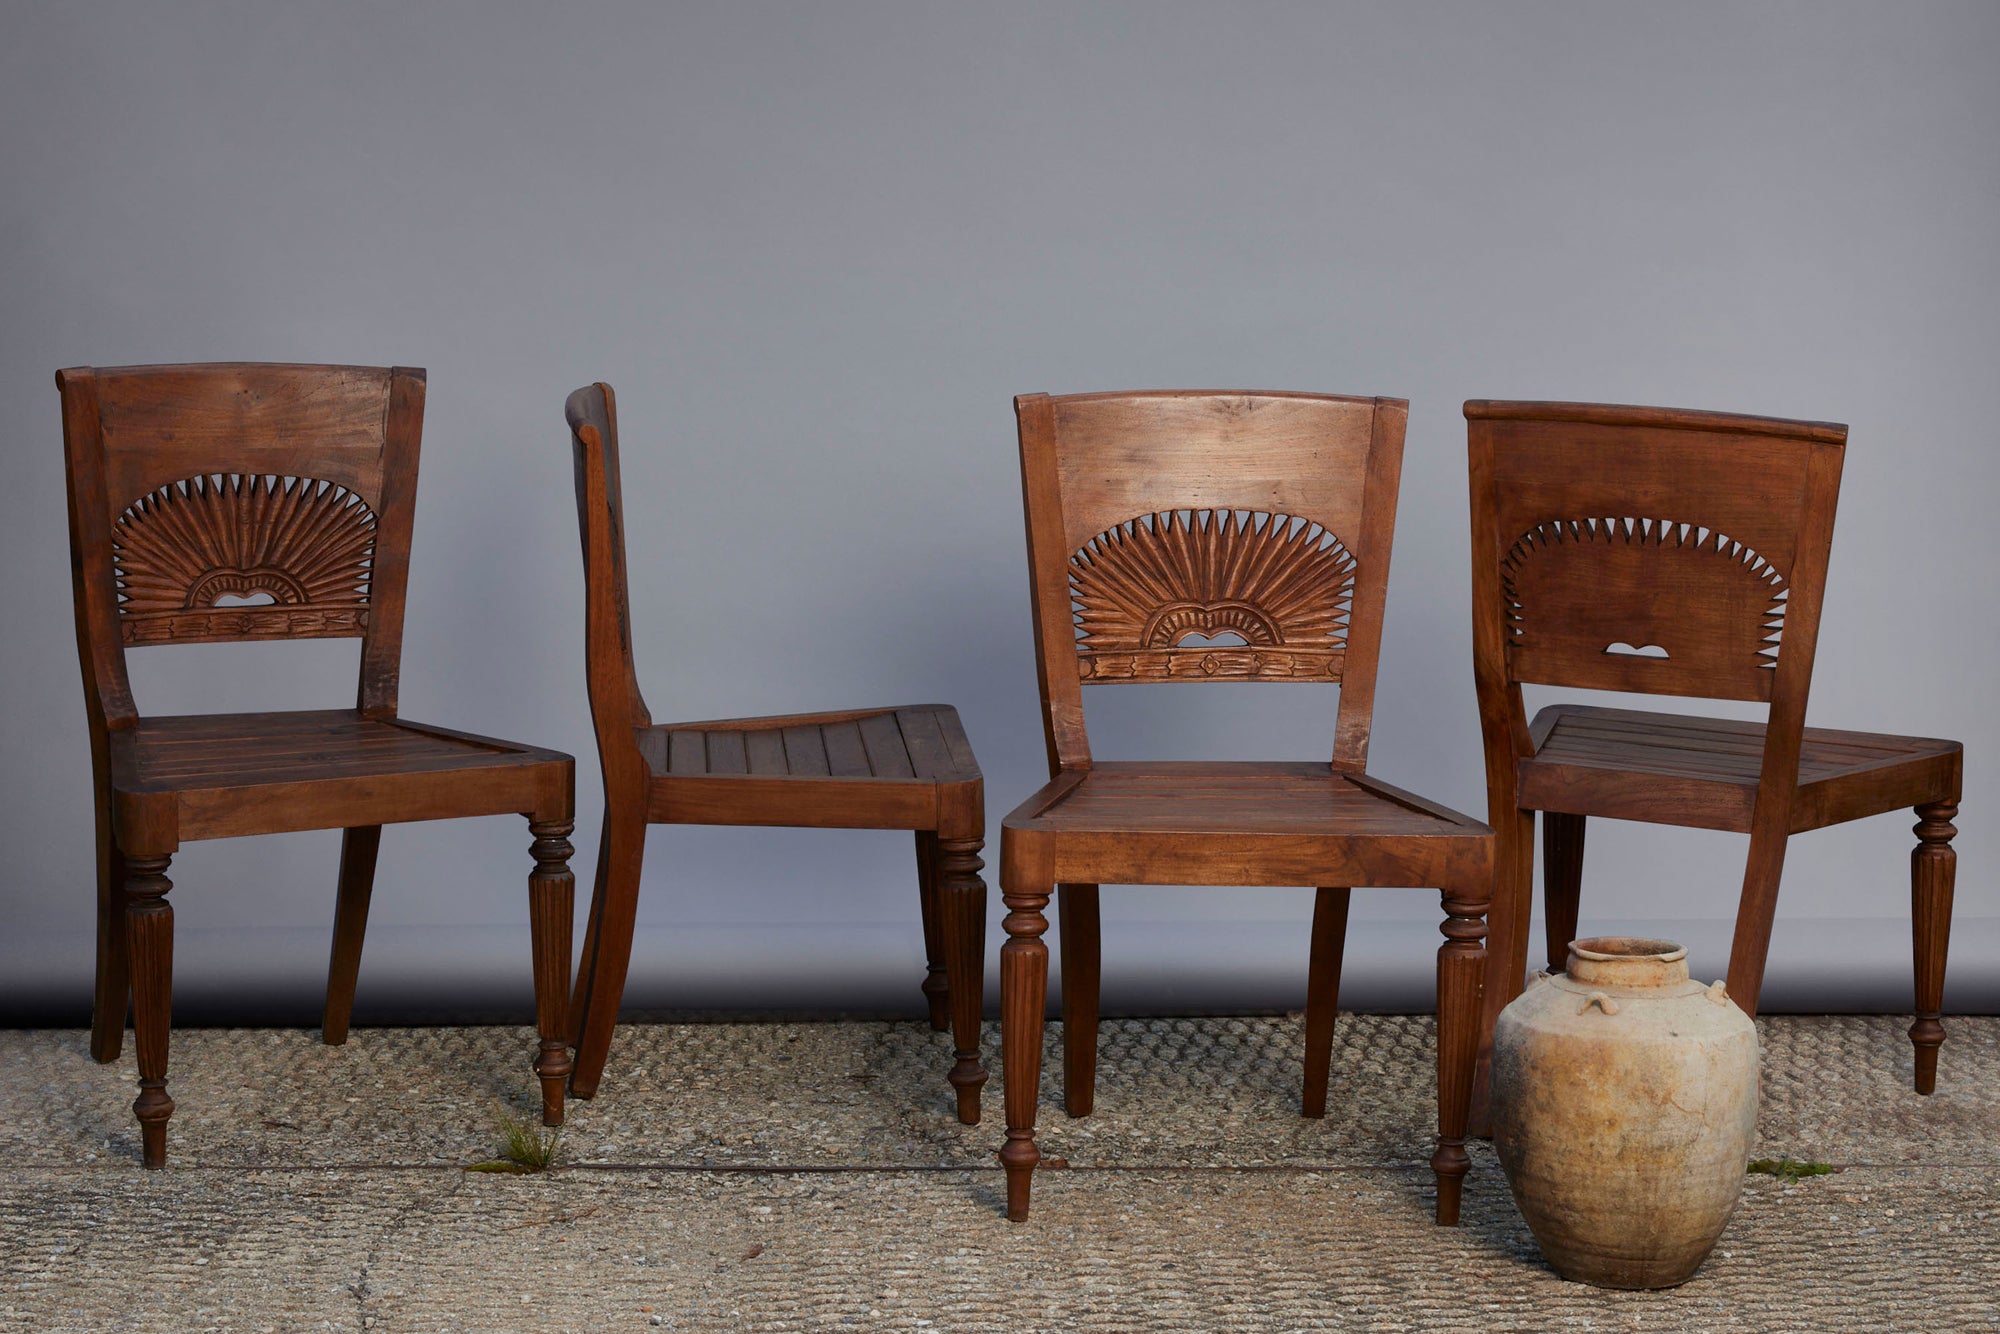 Set of 6 Teak Chairs with Starburst Design